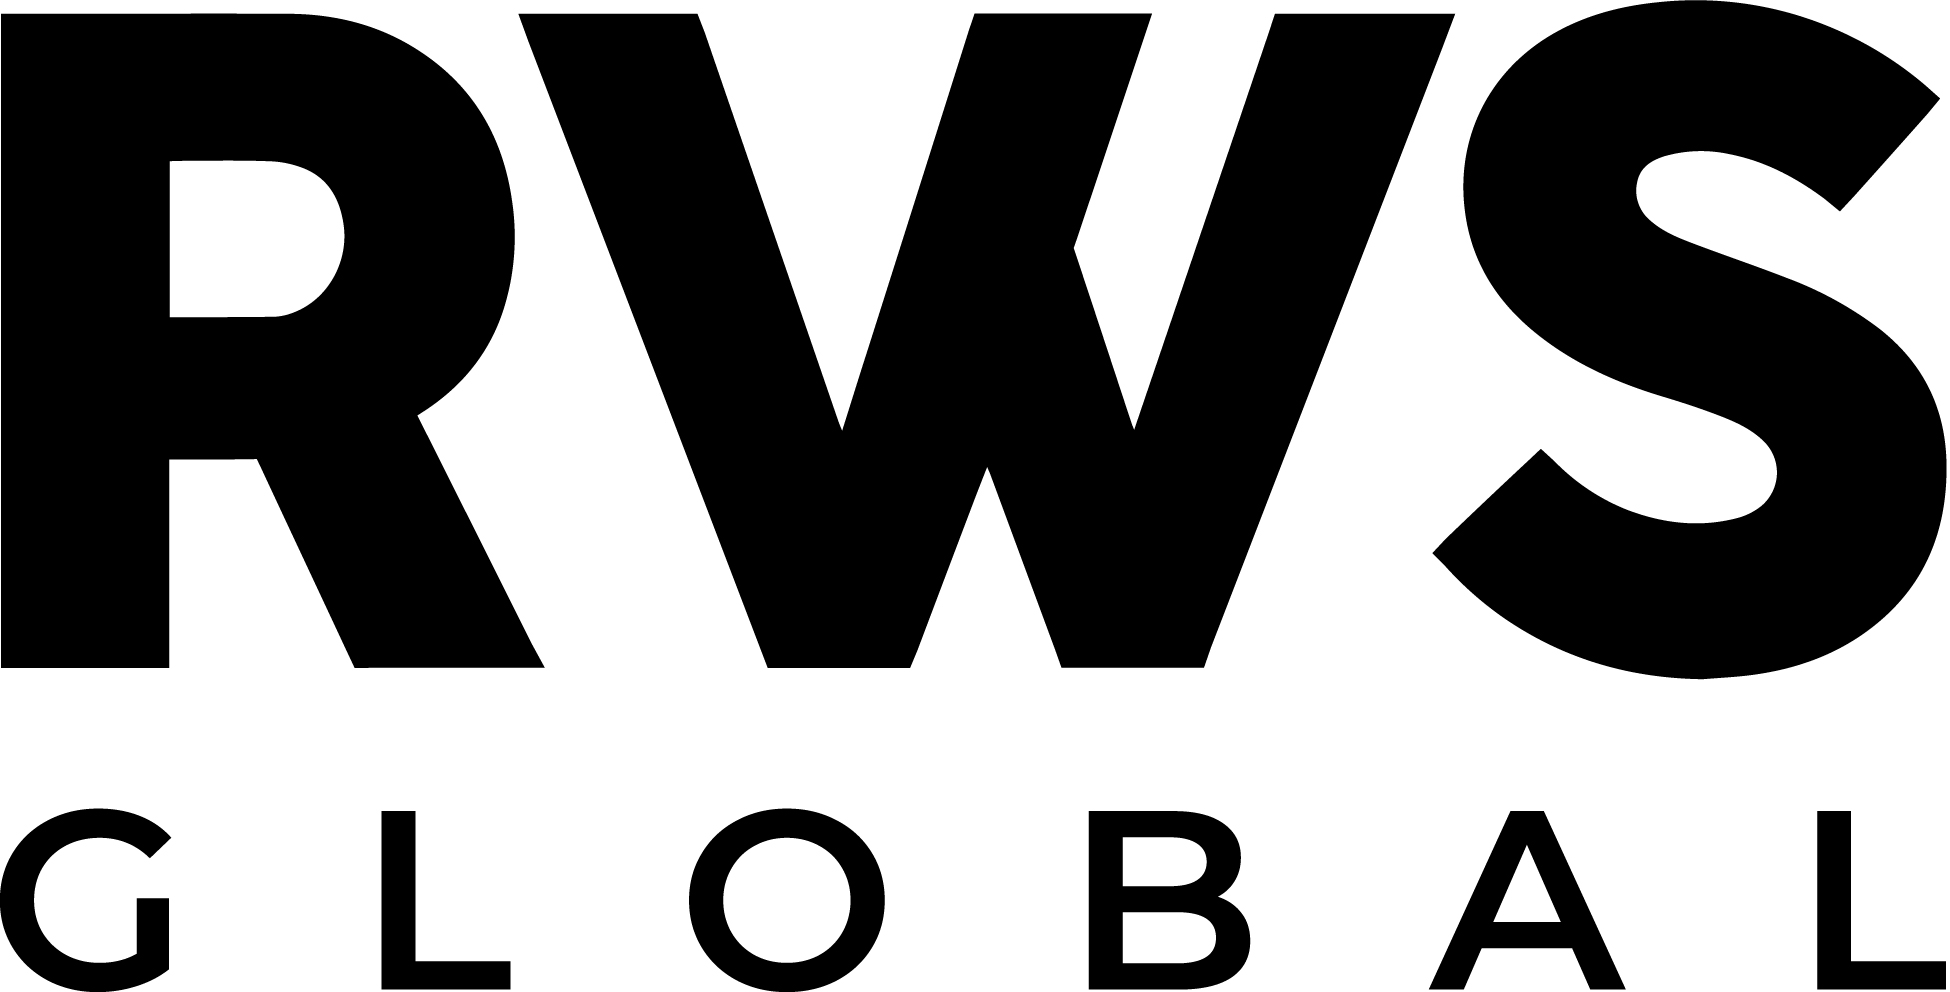 RWS Global